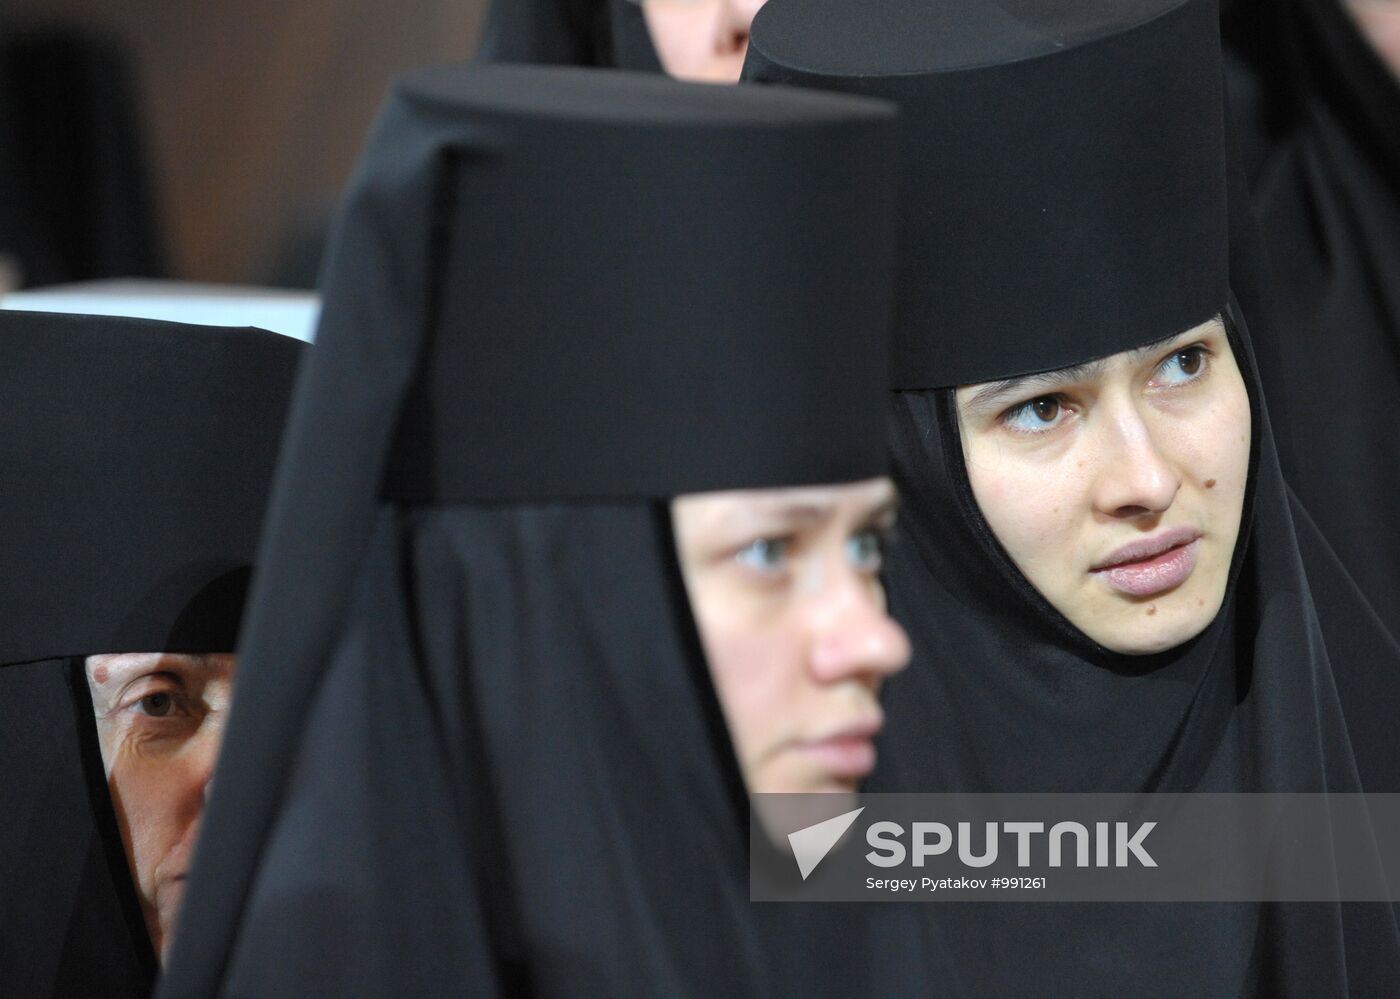 Church service marks Patriarch Kirill's 65th birthday